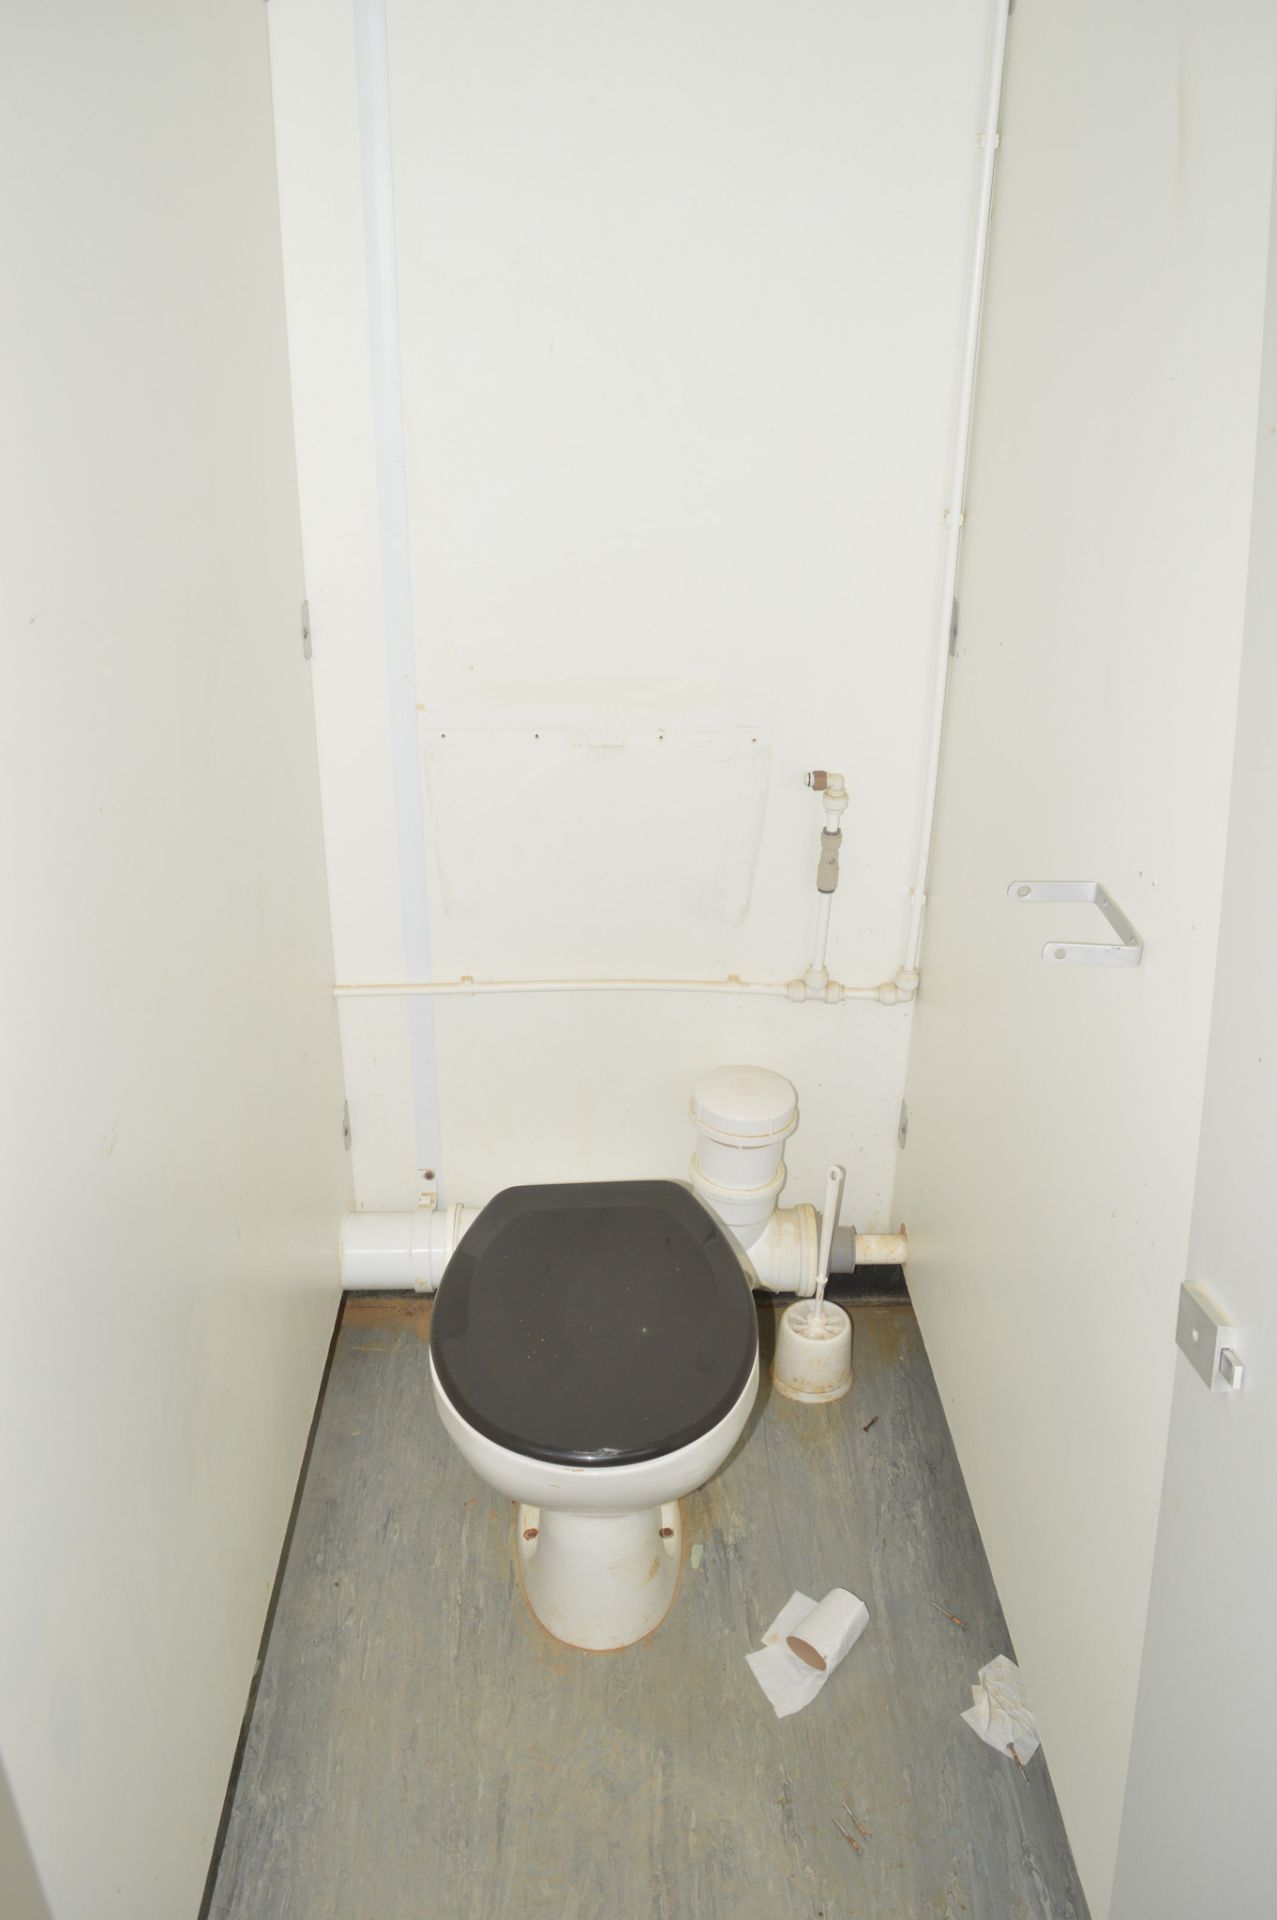 21 ft x 9 ft steel anti vandal jack leg toilet block Blue&White *No keys but unlocked* - Image 8 of 12